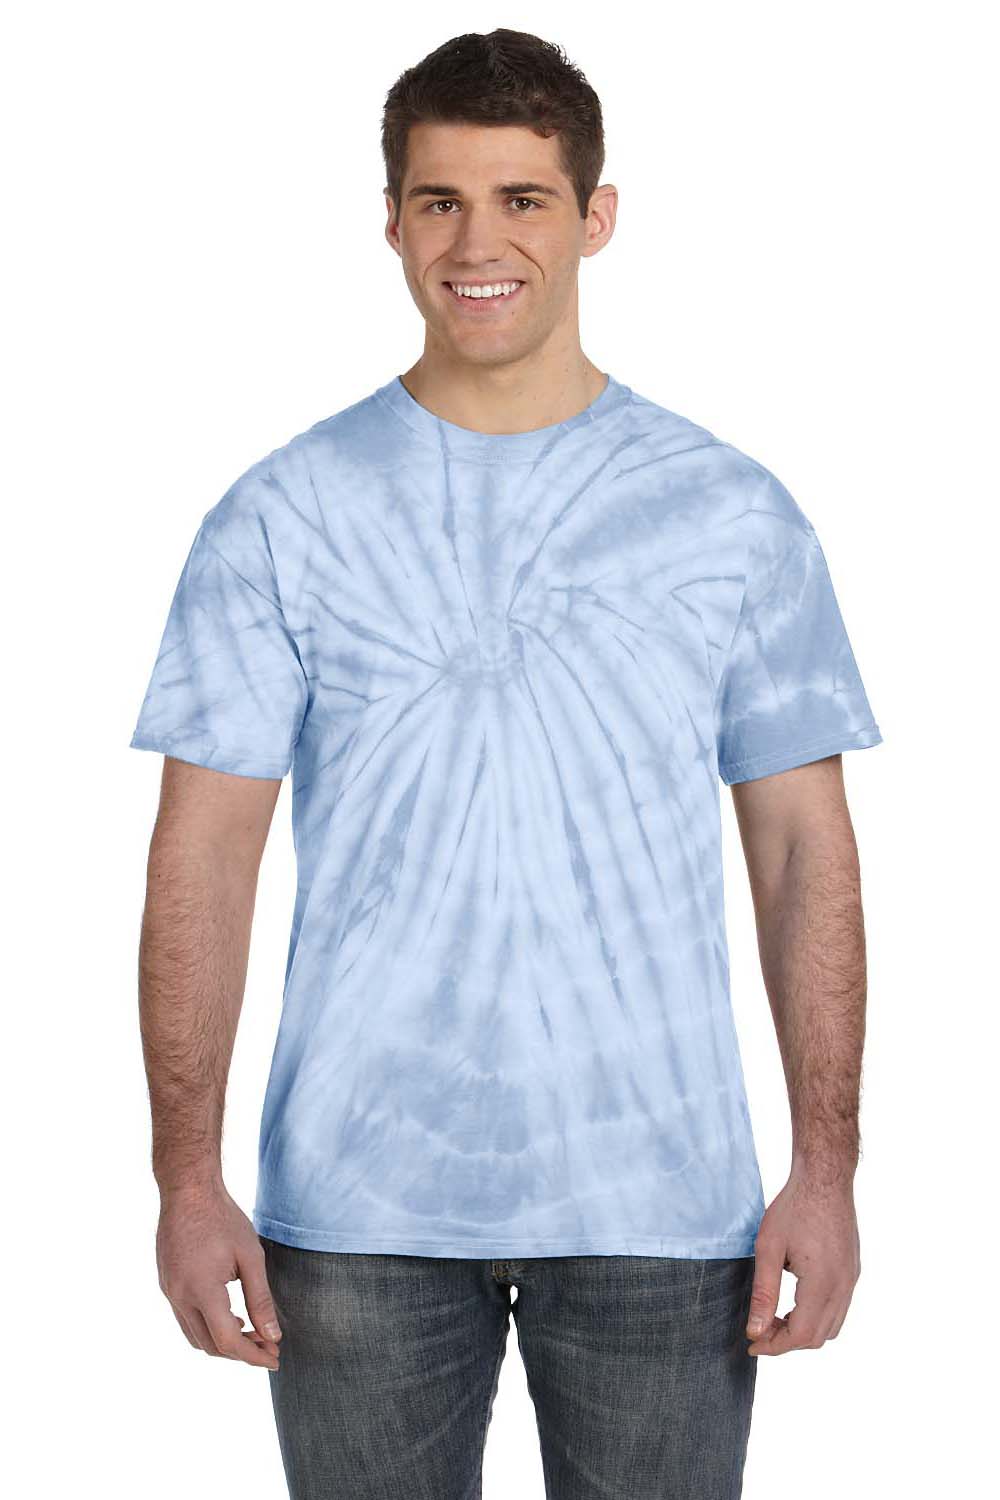 Tie-Dye CD101 Mens Short Sleeve Crewneck T-Shirt Baby Blue Front